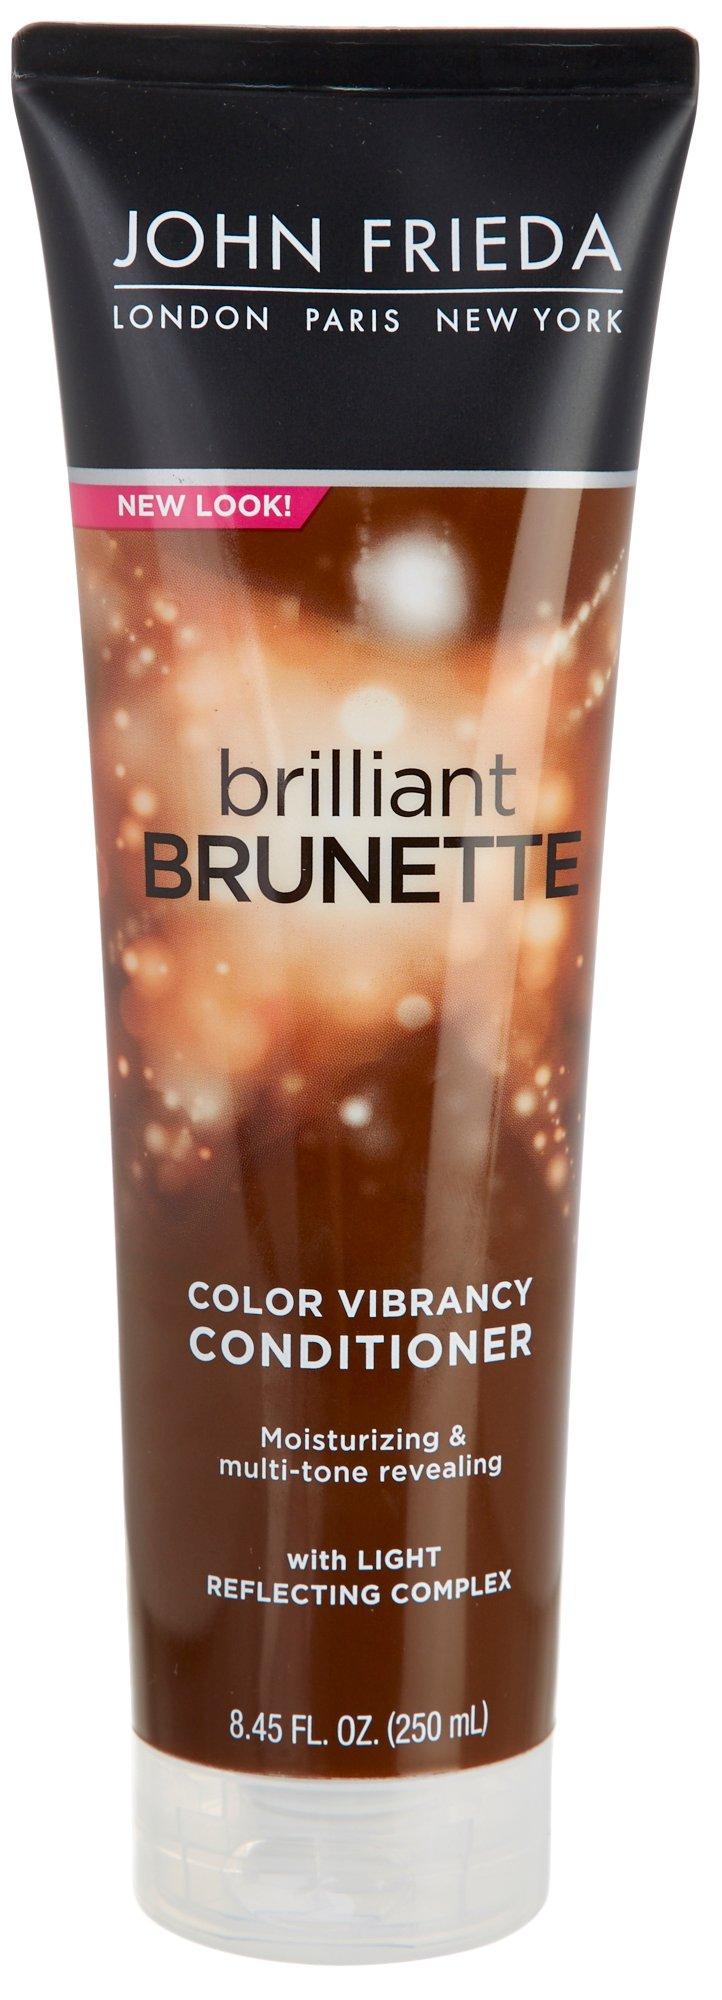 Brilliant Brunette Color Vibrancy Conditioner